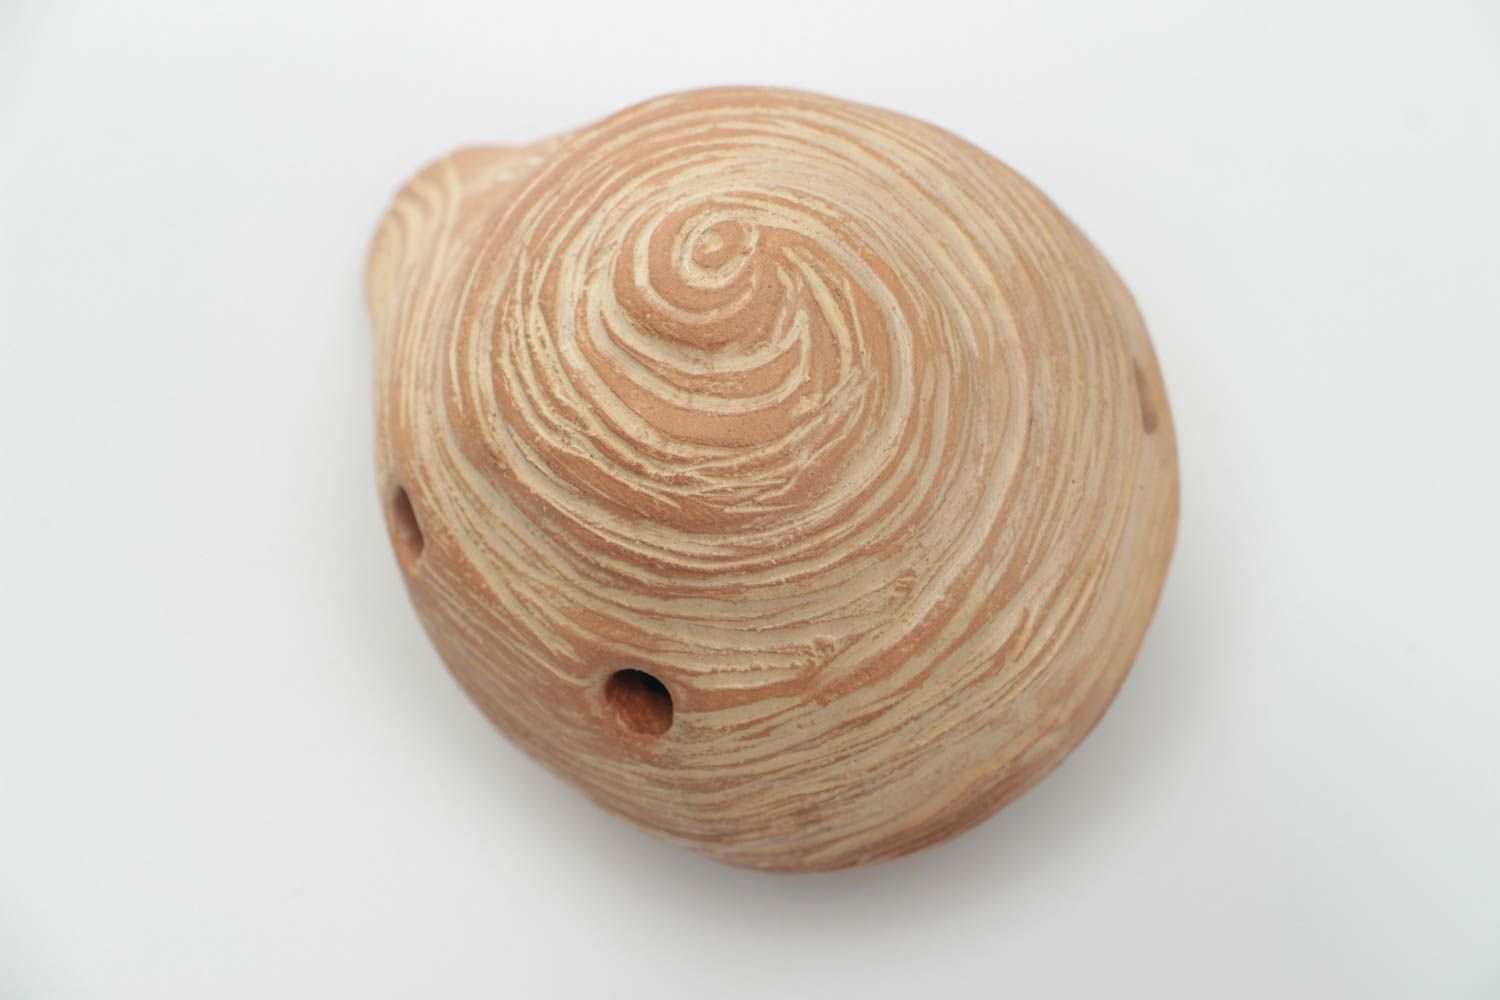 Handmade decorative round gray ceramic ocarina ethnic musical instrument photo 3